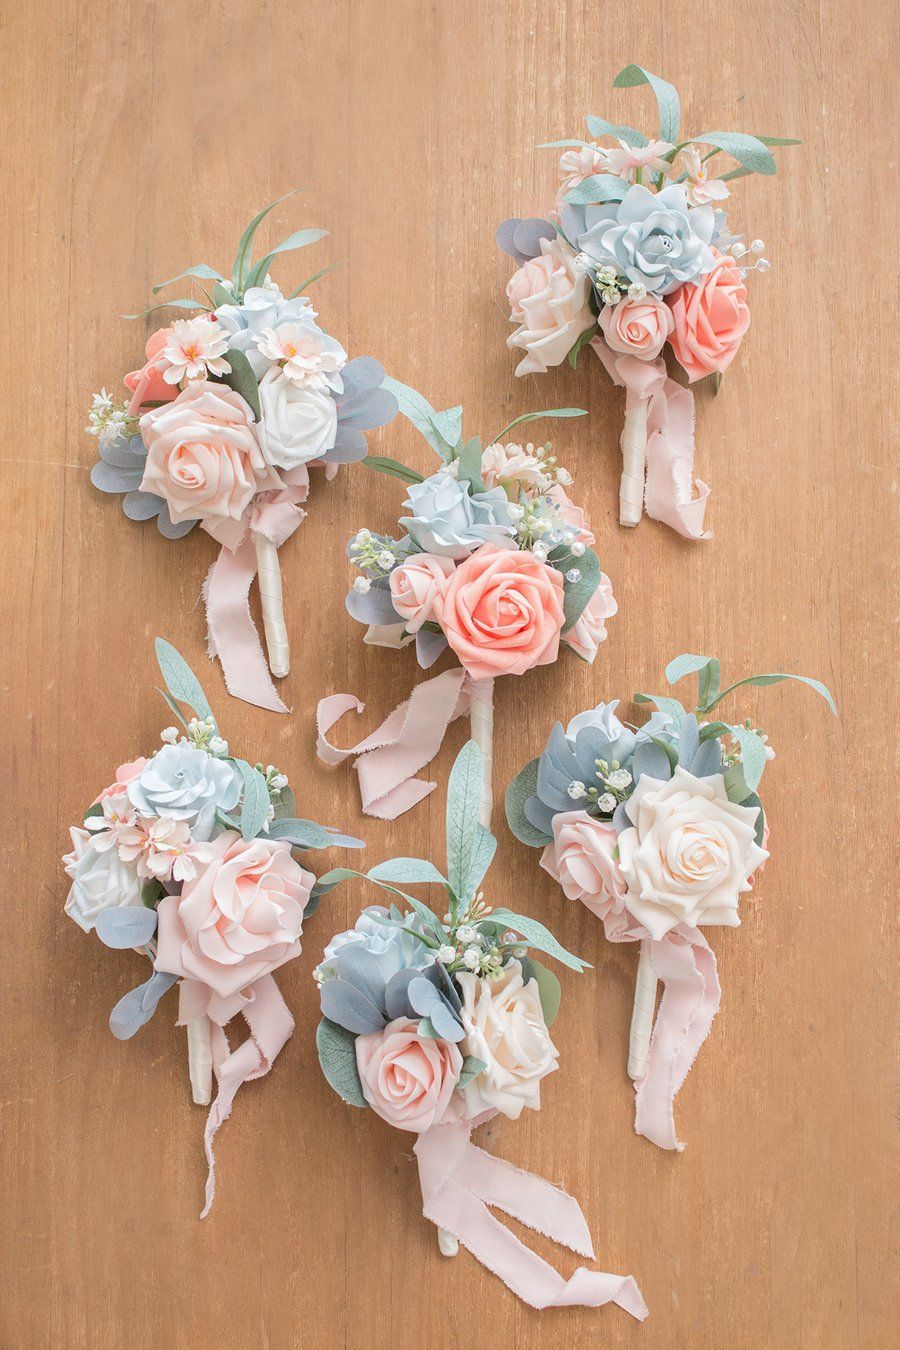 Centerpiece Mini Flower Bouquets (Set of 6) - Pastel Blush - Centerpiece Mini Flower Bouquets (Set of 6) - Pastel Blush -   18 diy Wedding backdrop ideas